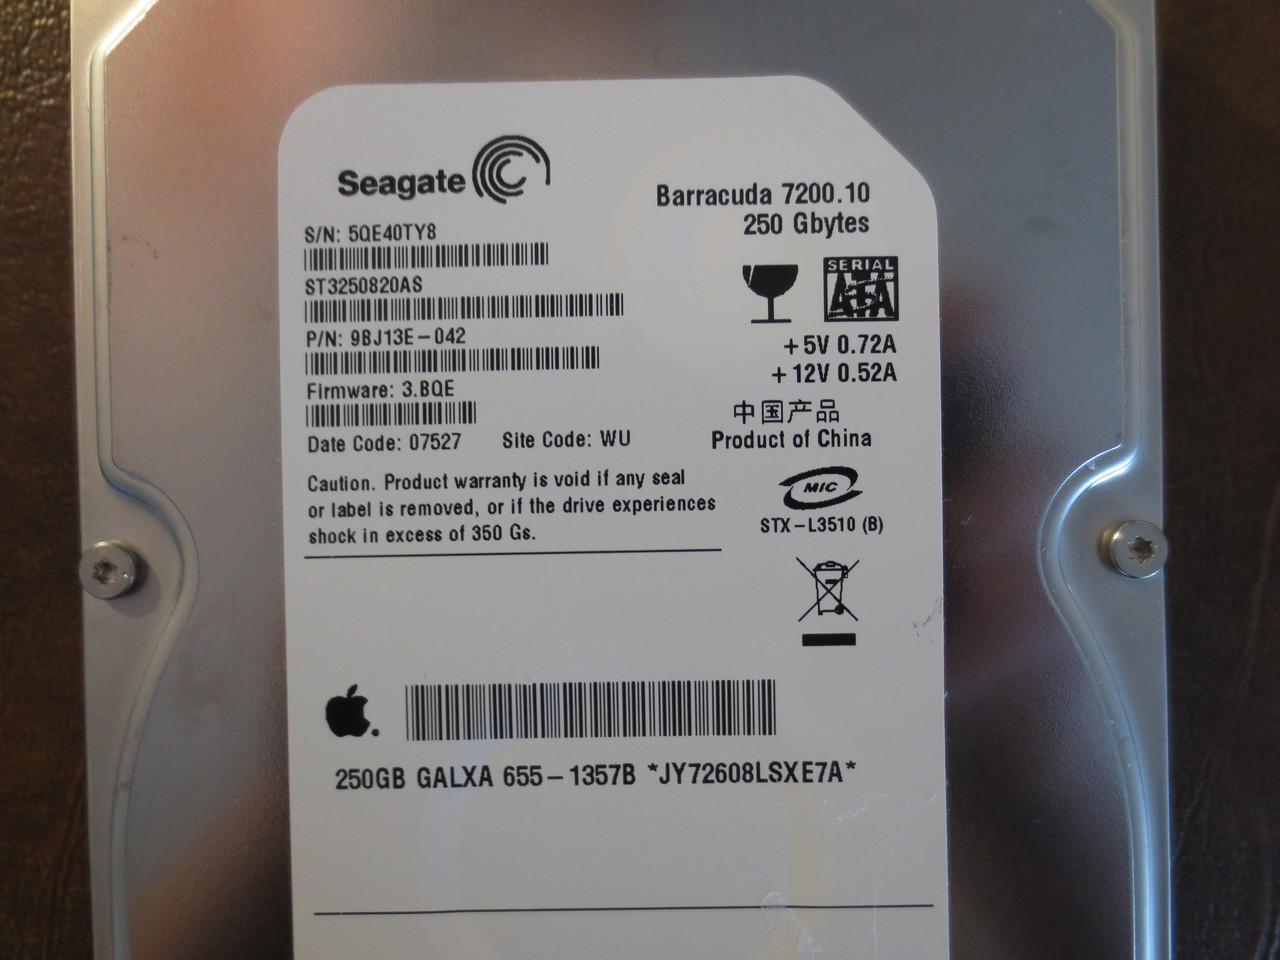 Seagate ST3250820AS 9BJ13E-042 FW:3.BQE WU Apple#655-1357B 250gb Sata -  Effective Electronics